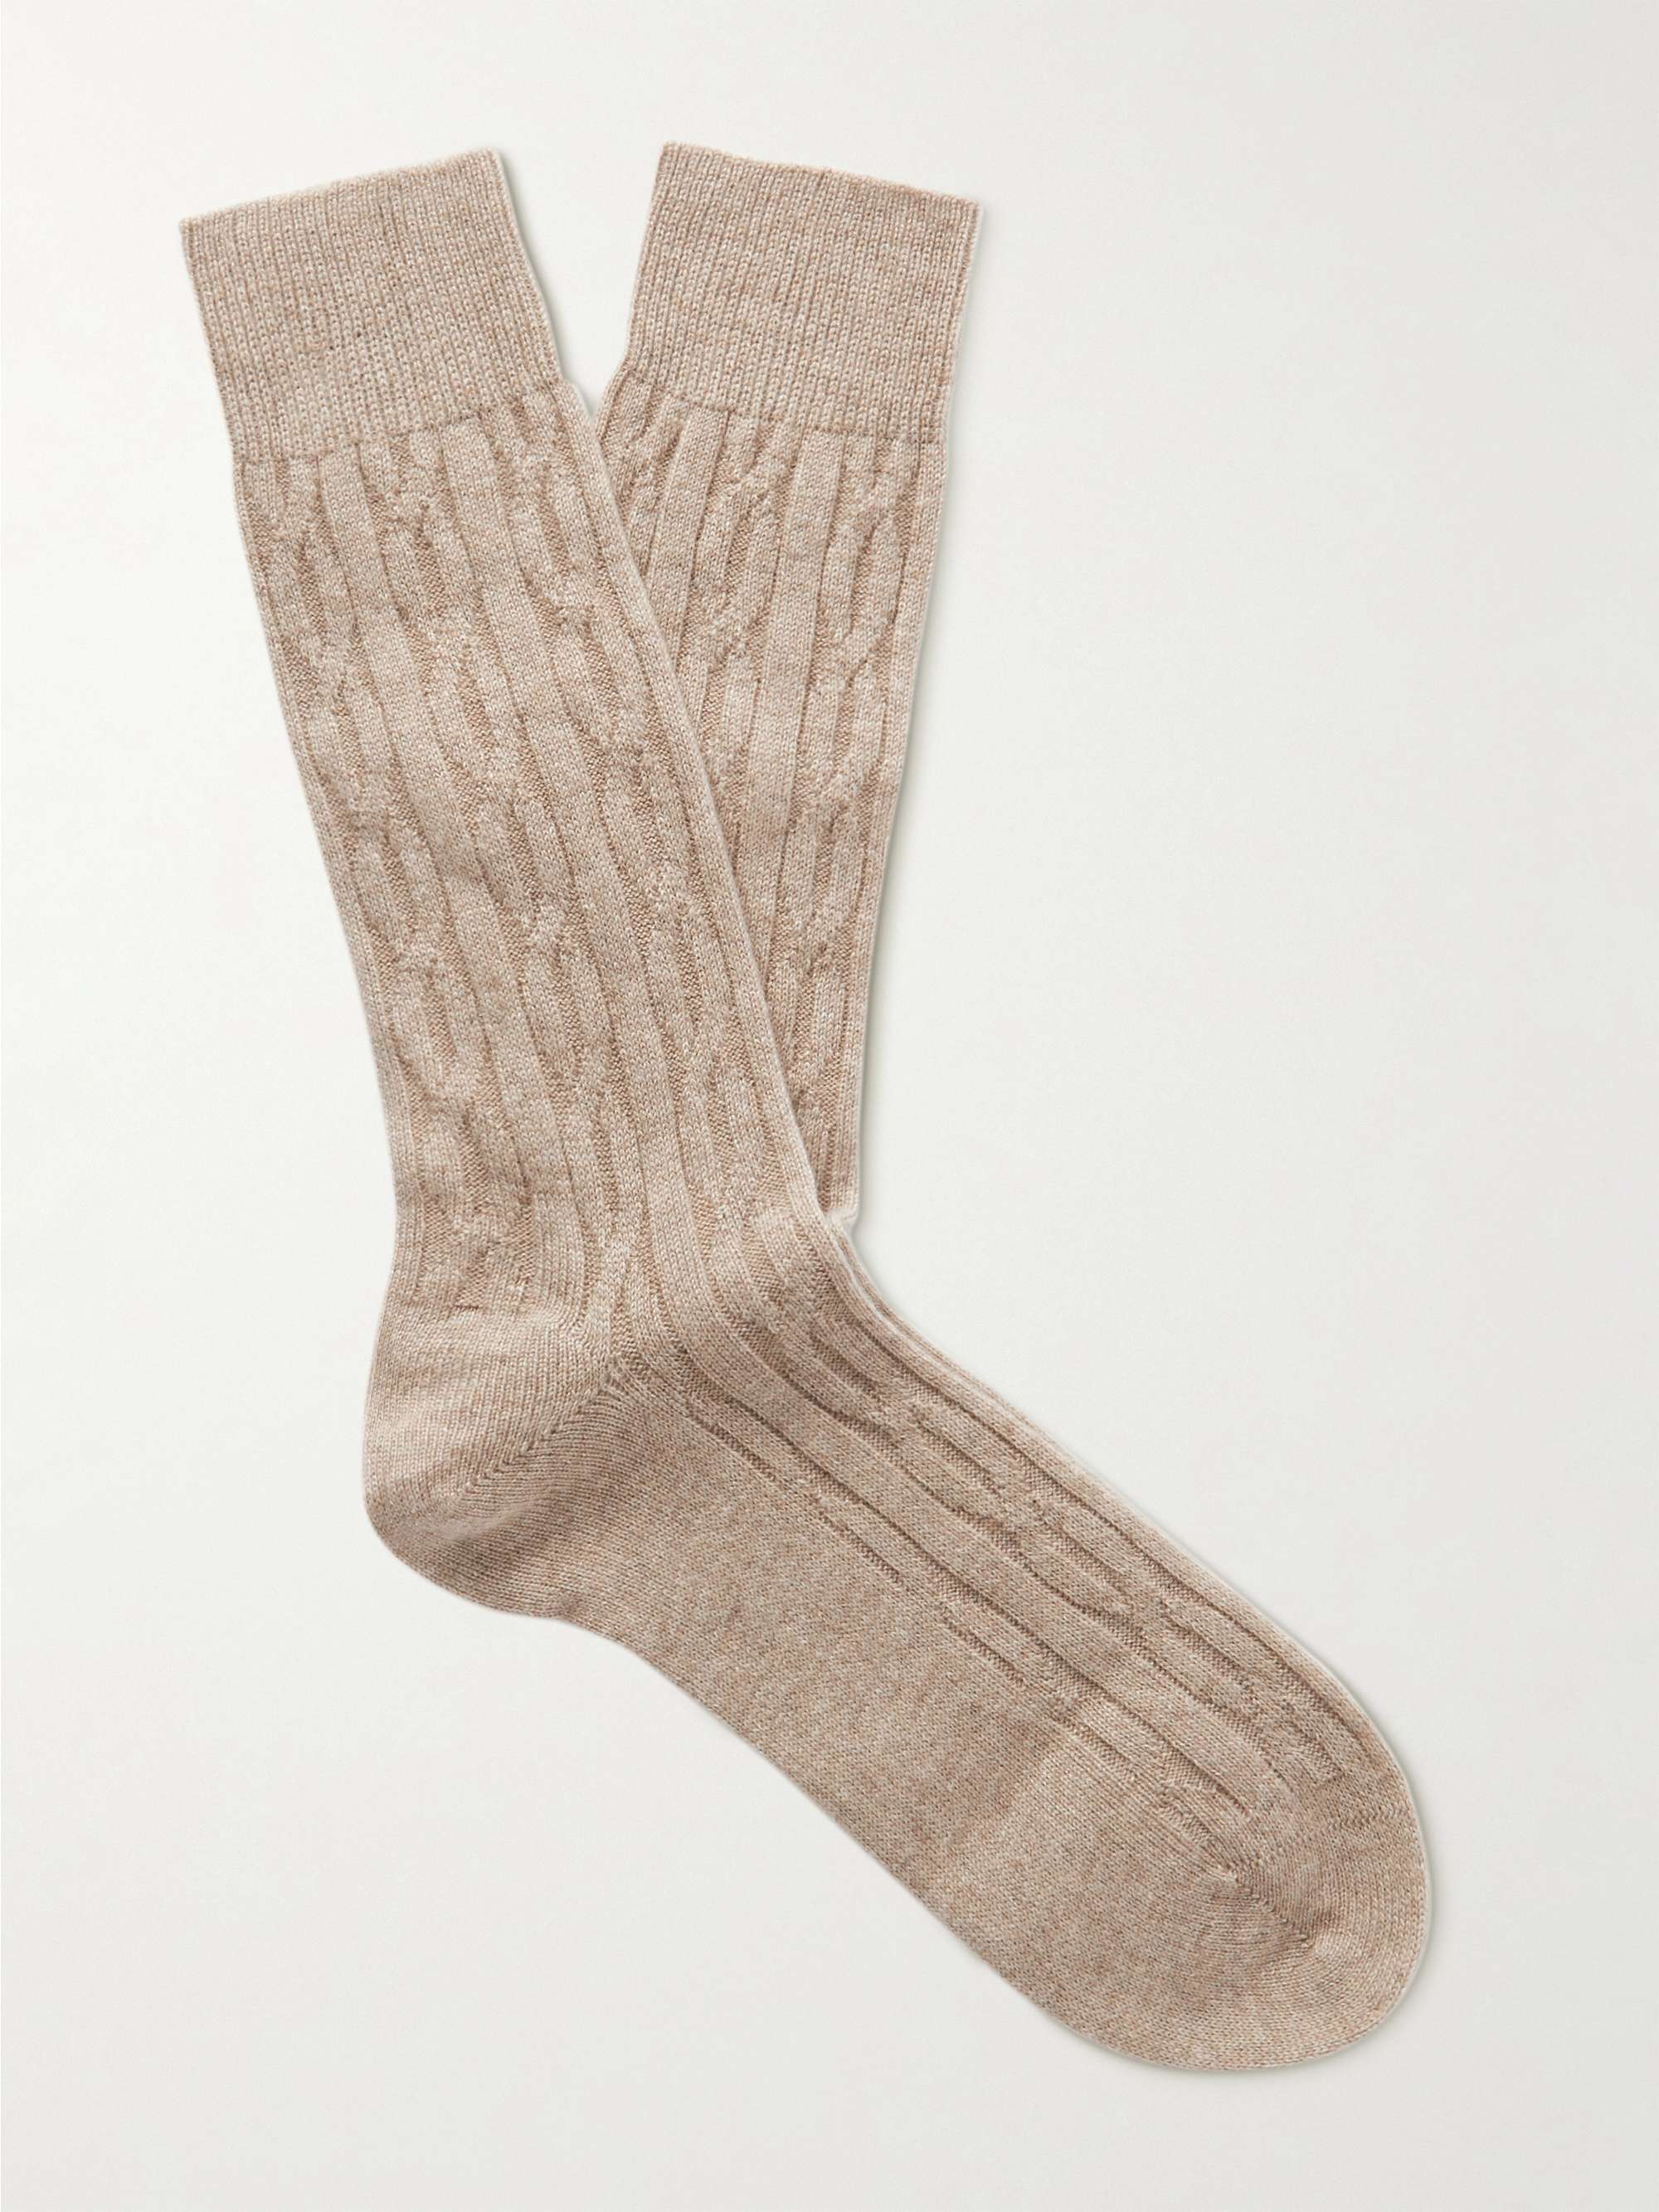 Beige Cable-Knit Cashmere Socks | ANDERSON & SHEPPARD | MR PORTER